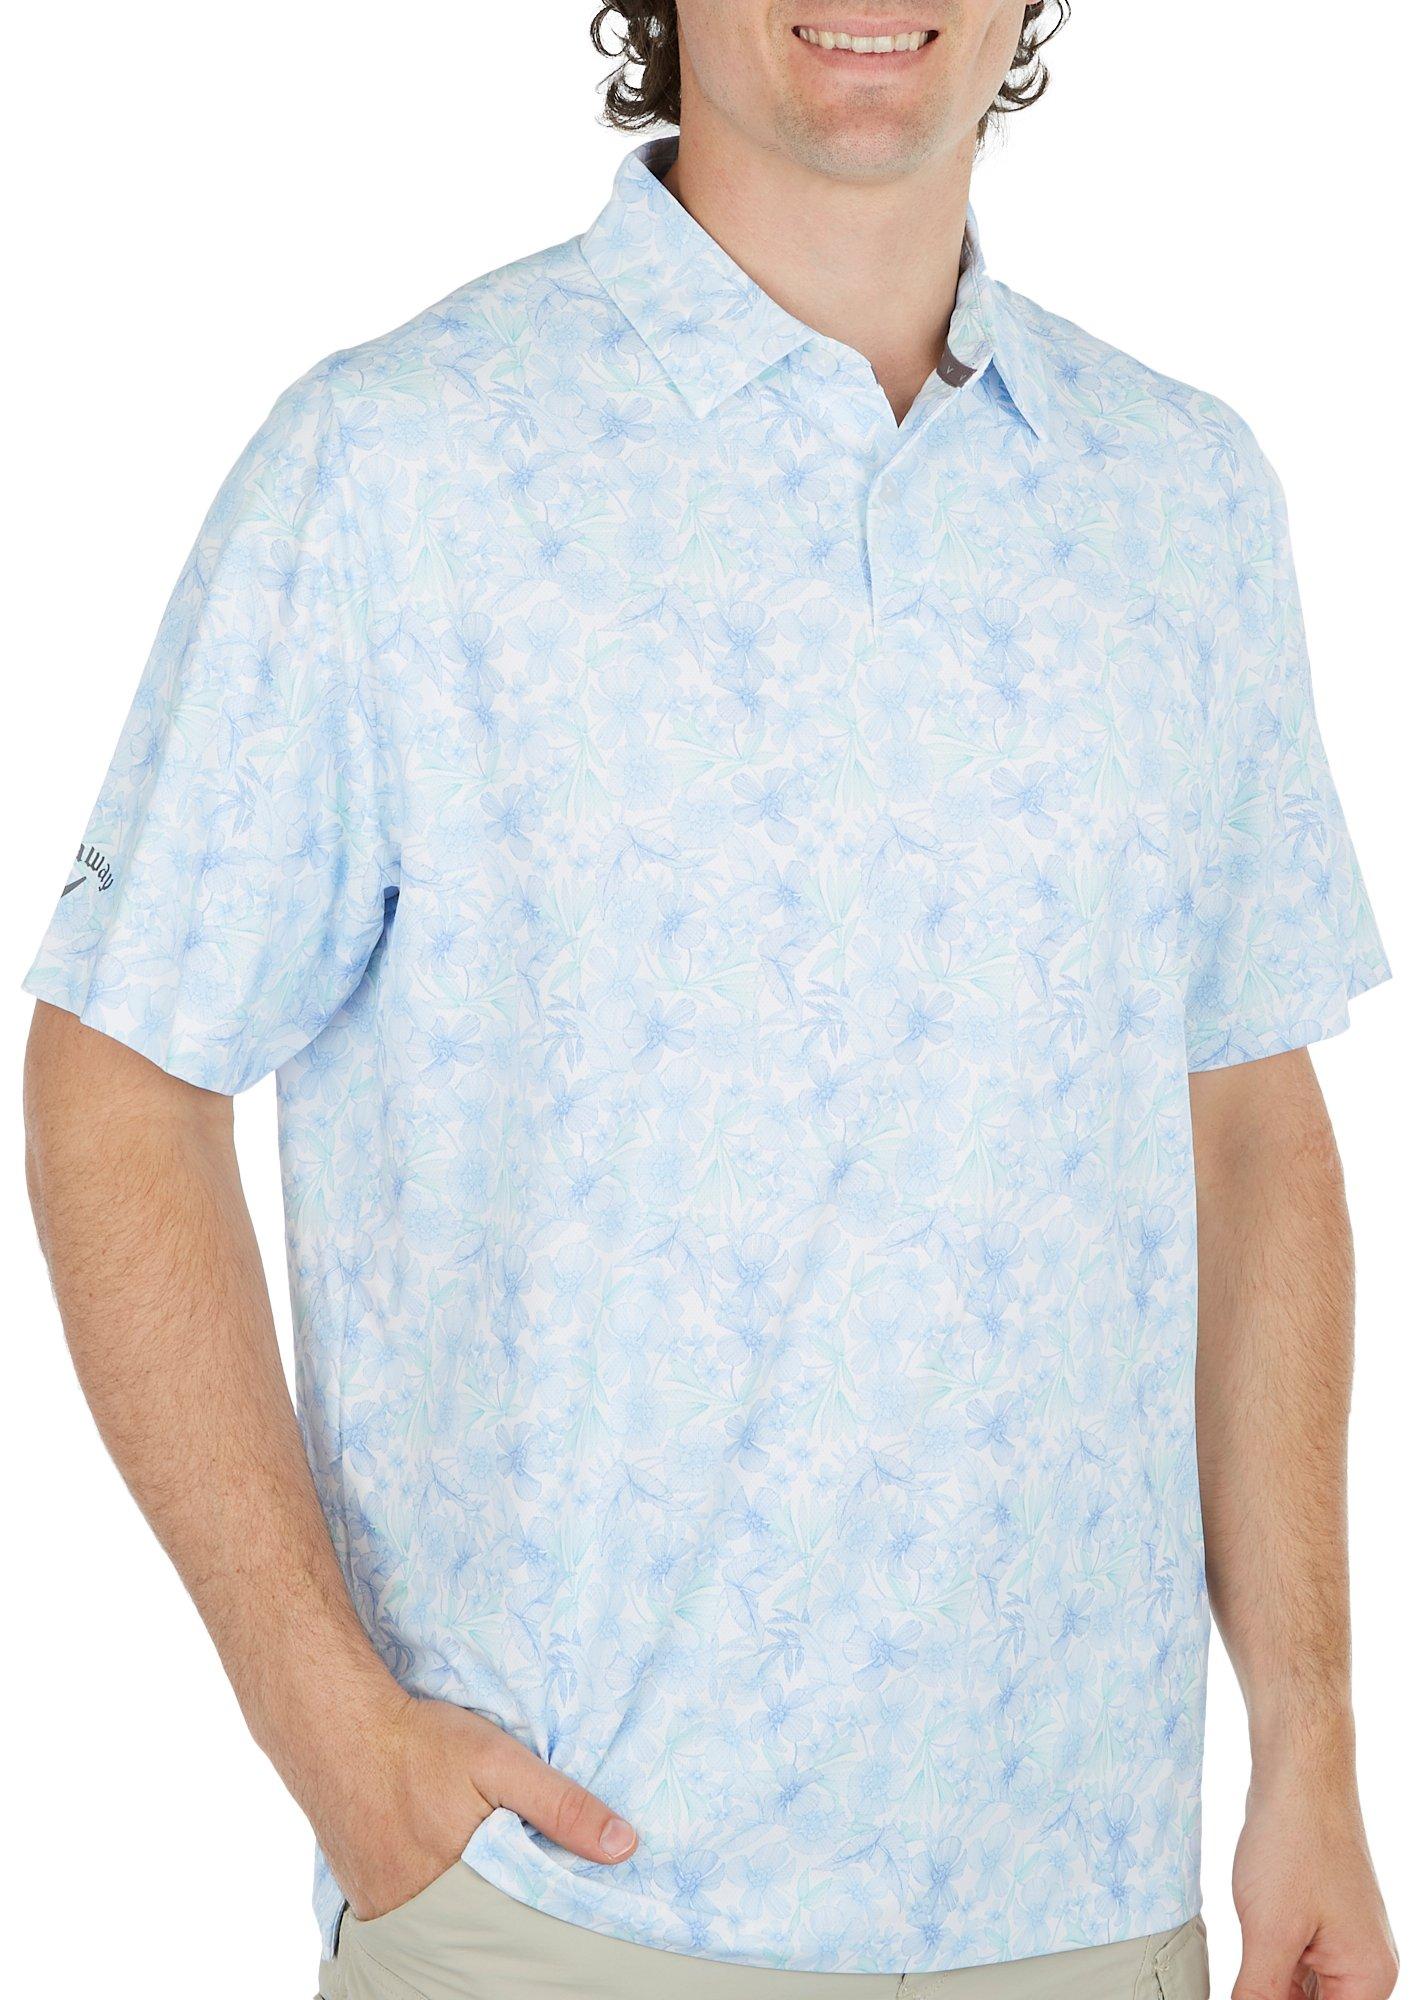 Callaway Mens Opti-Dri Floral Short Sleeve Polo Shirt